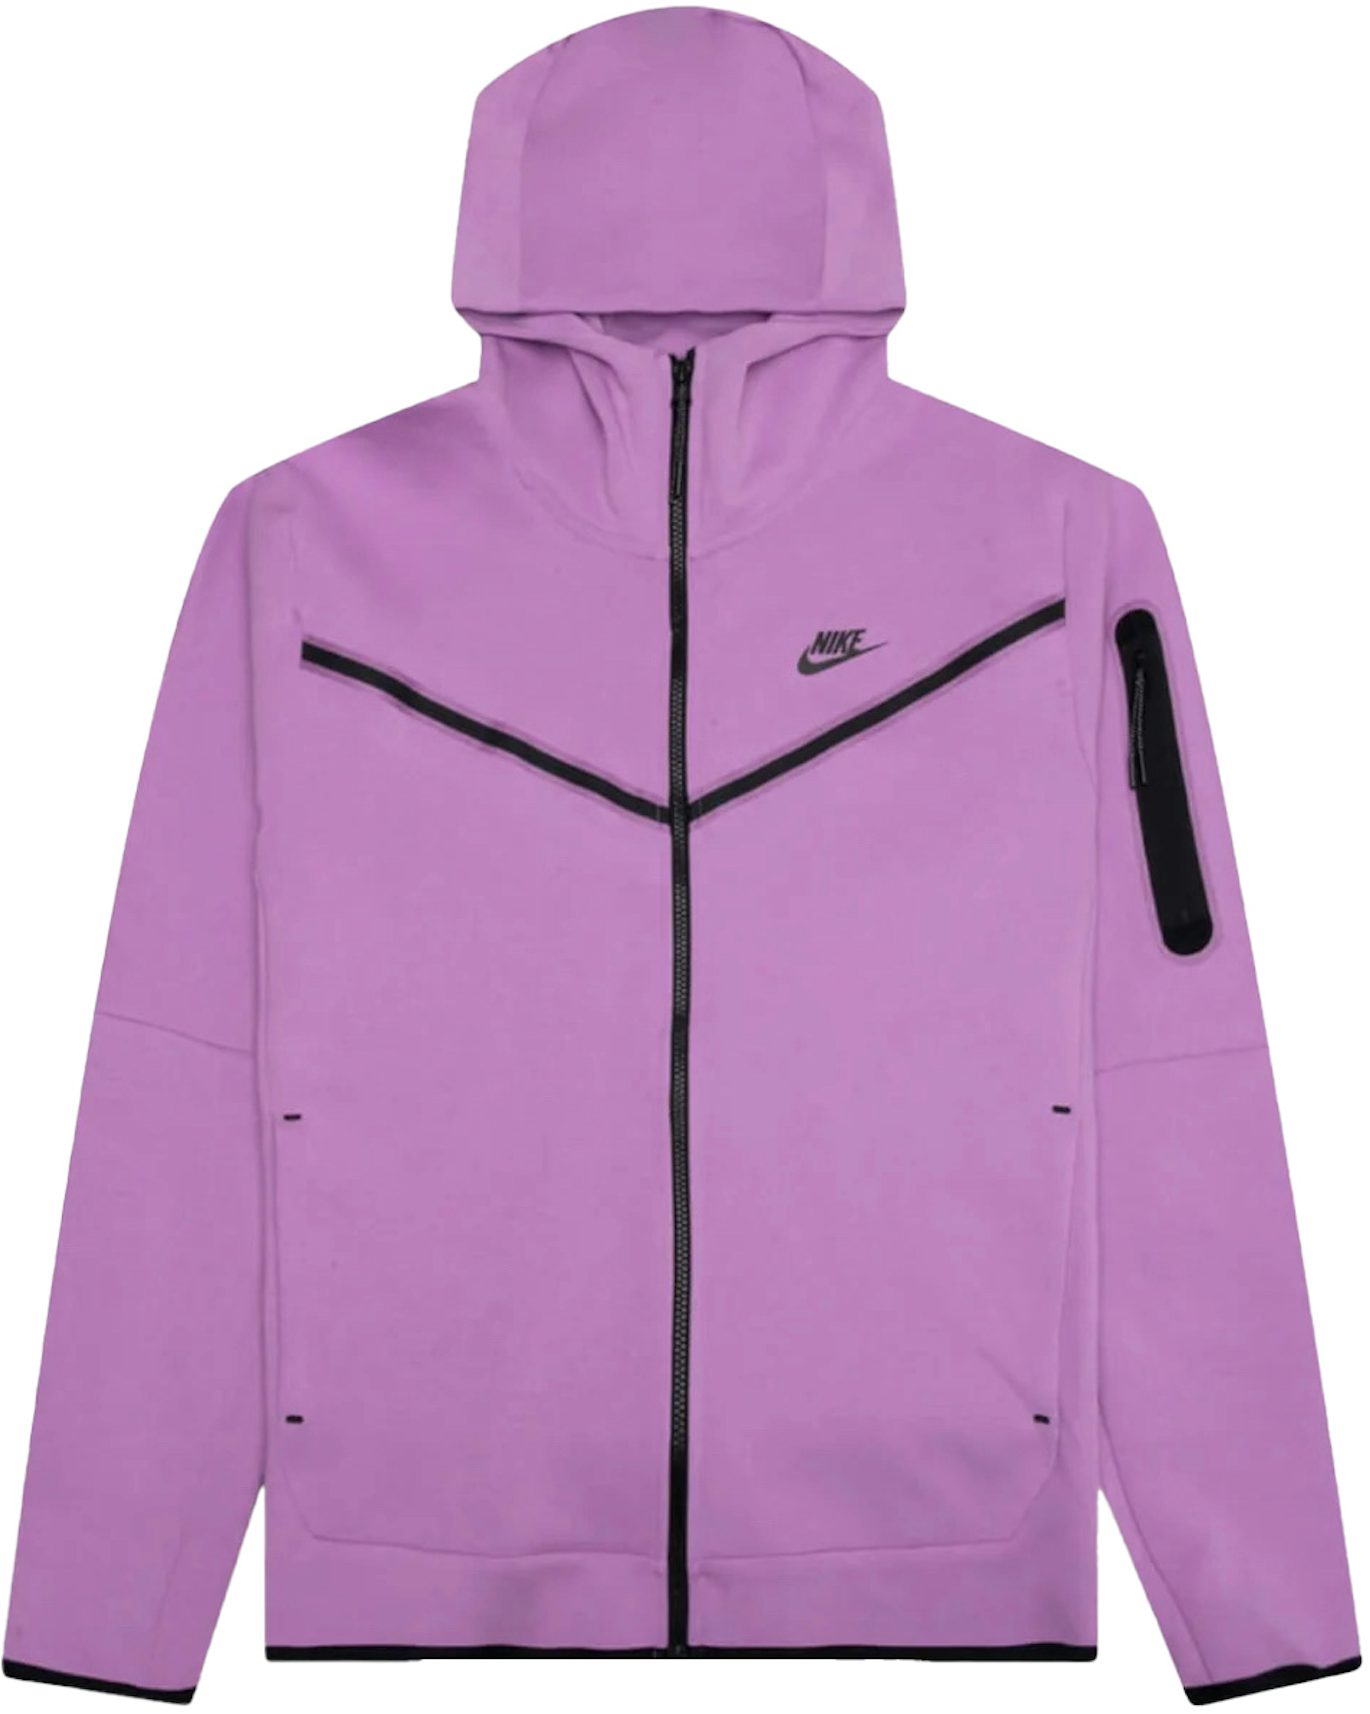 Nike x Ambush NBA Collection Lakers Jacket White/Purple/Gold - FW20 - US